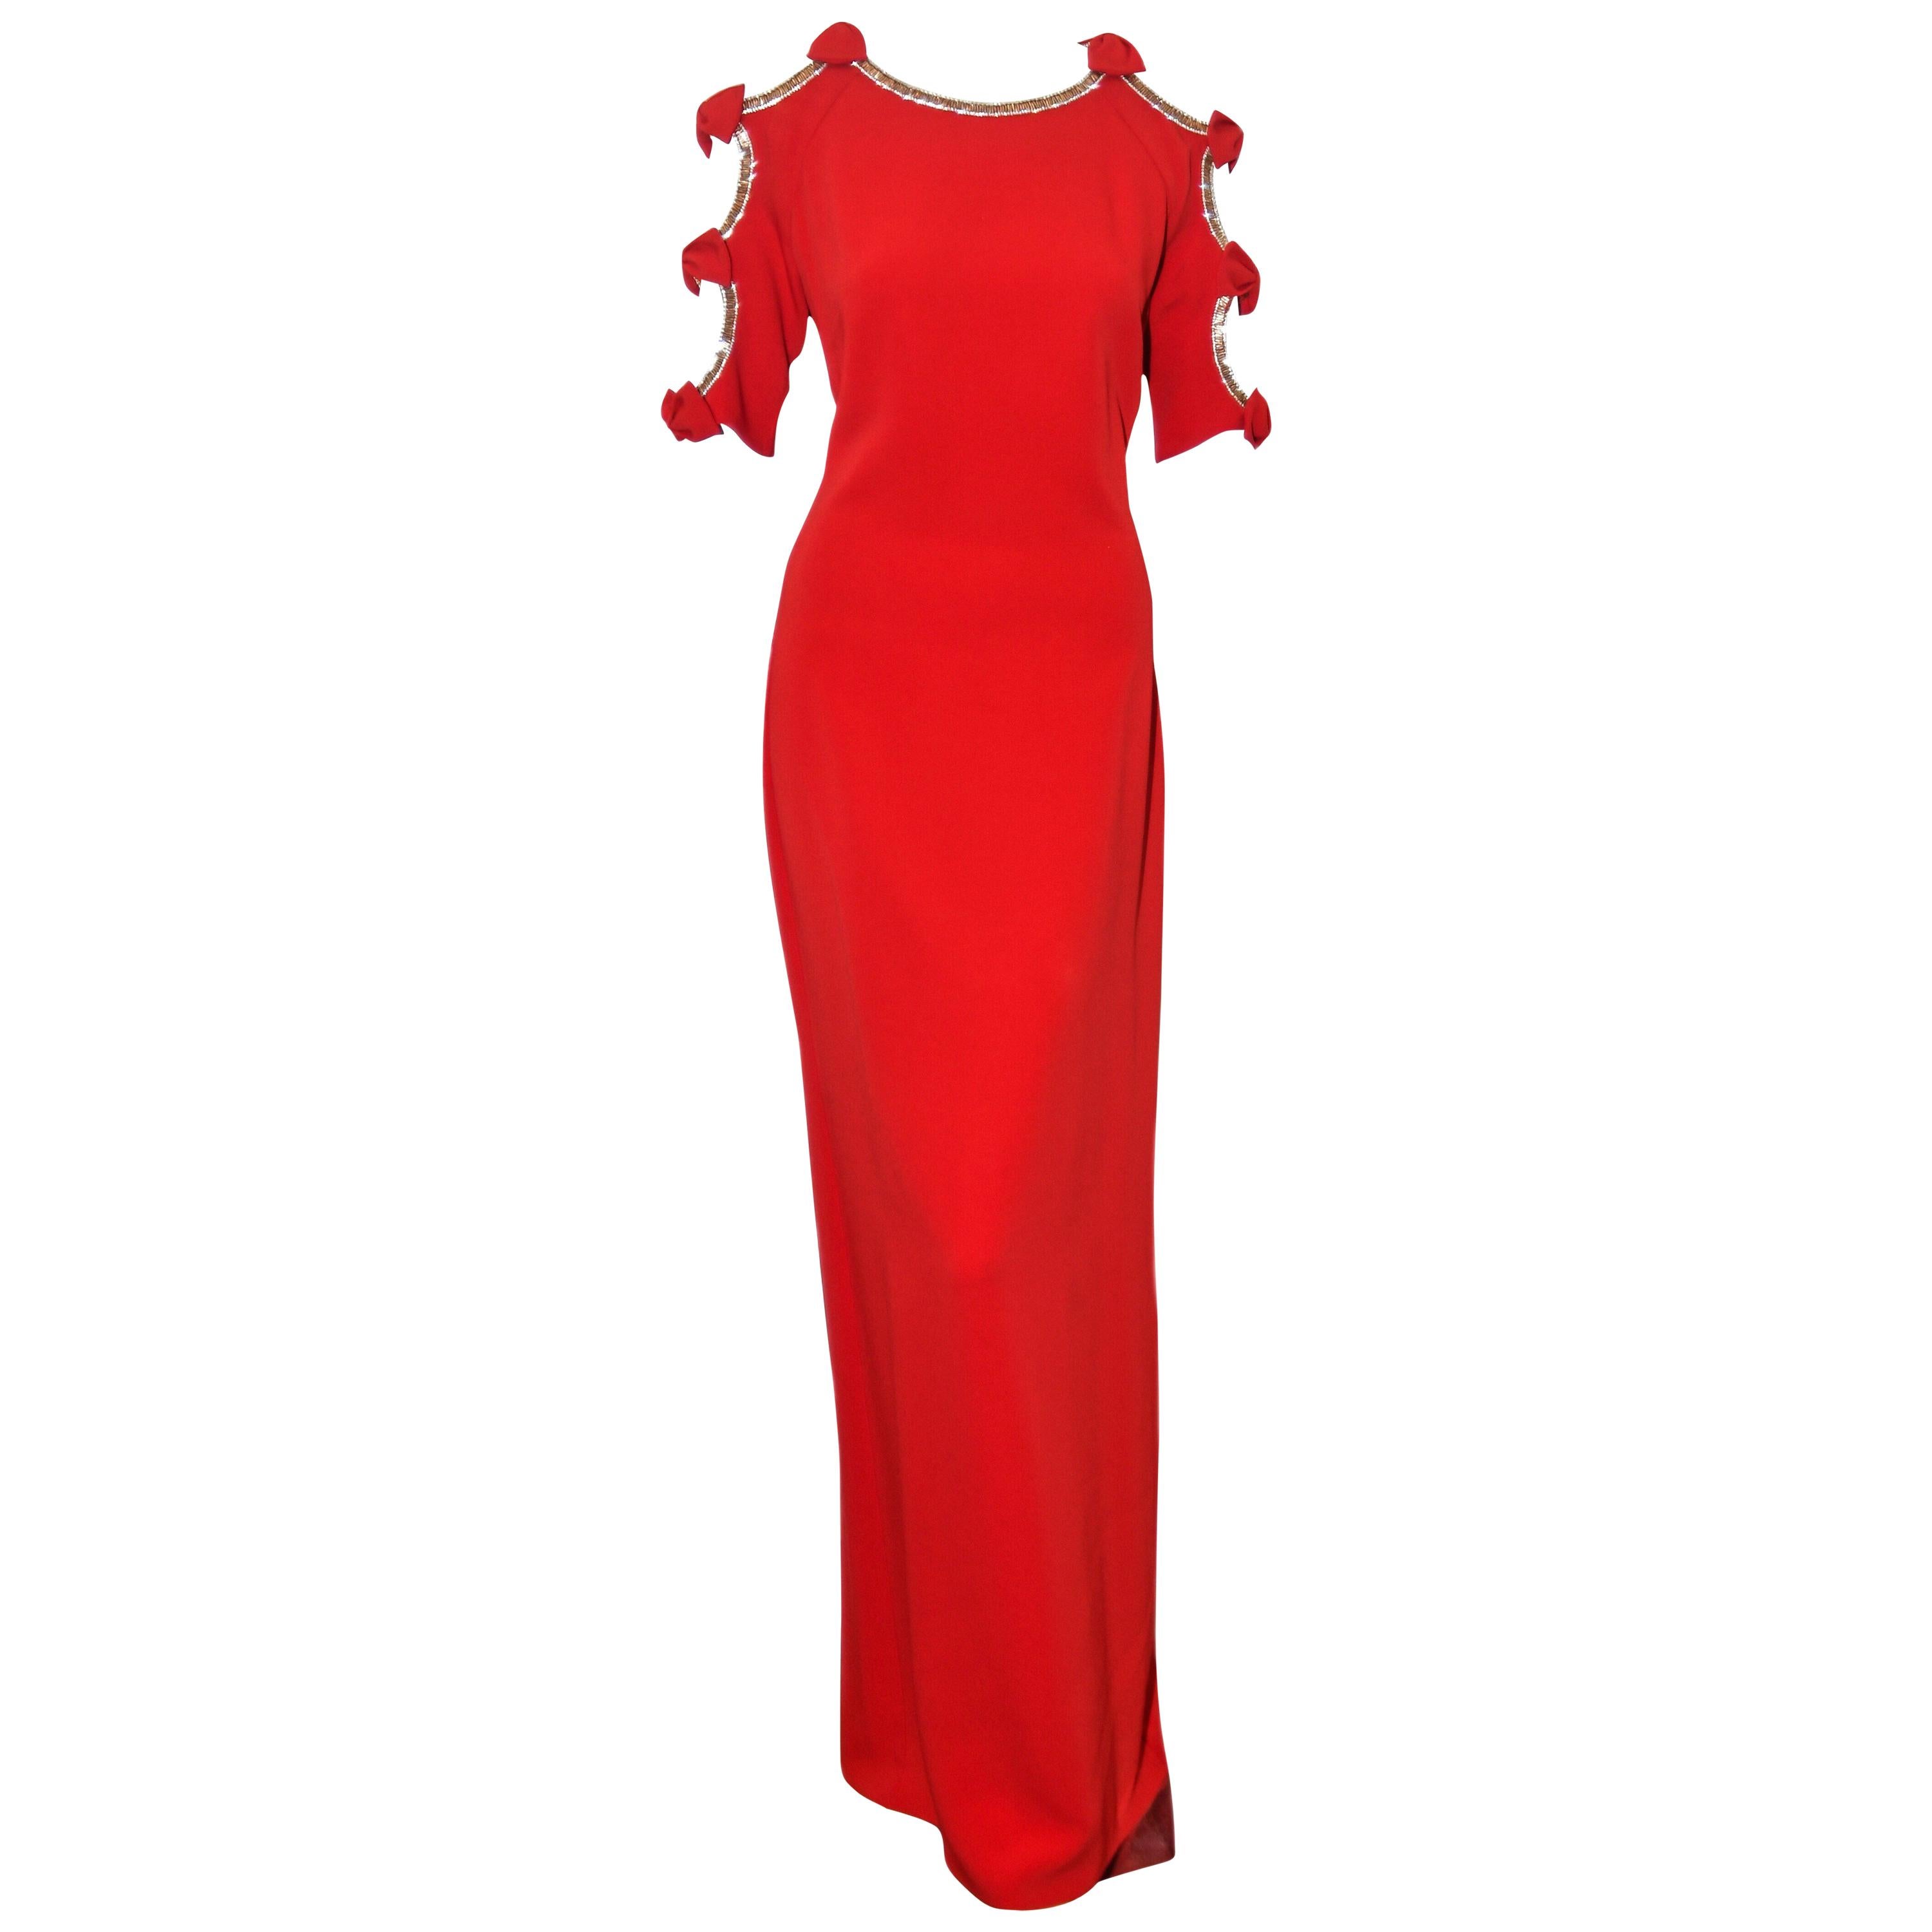 Jenny Packham Red Gown W/ Cold Shoulder Embellished Sleeves For Sale